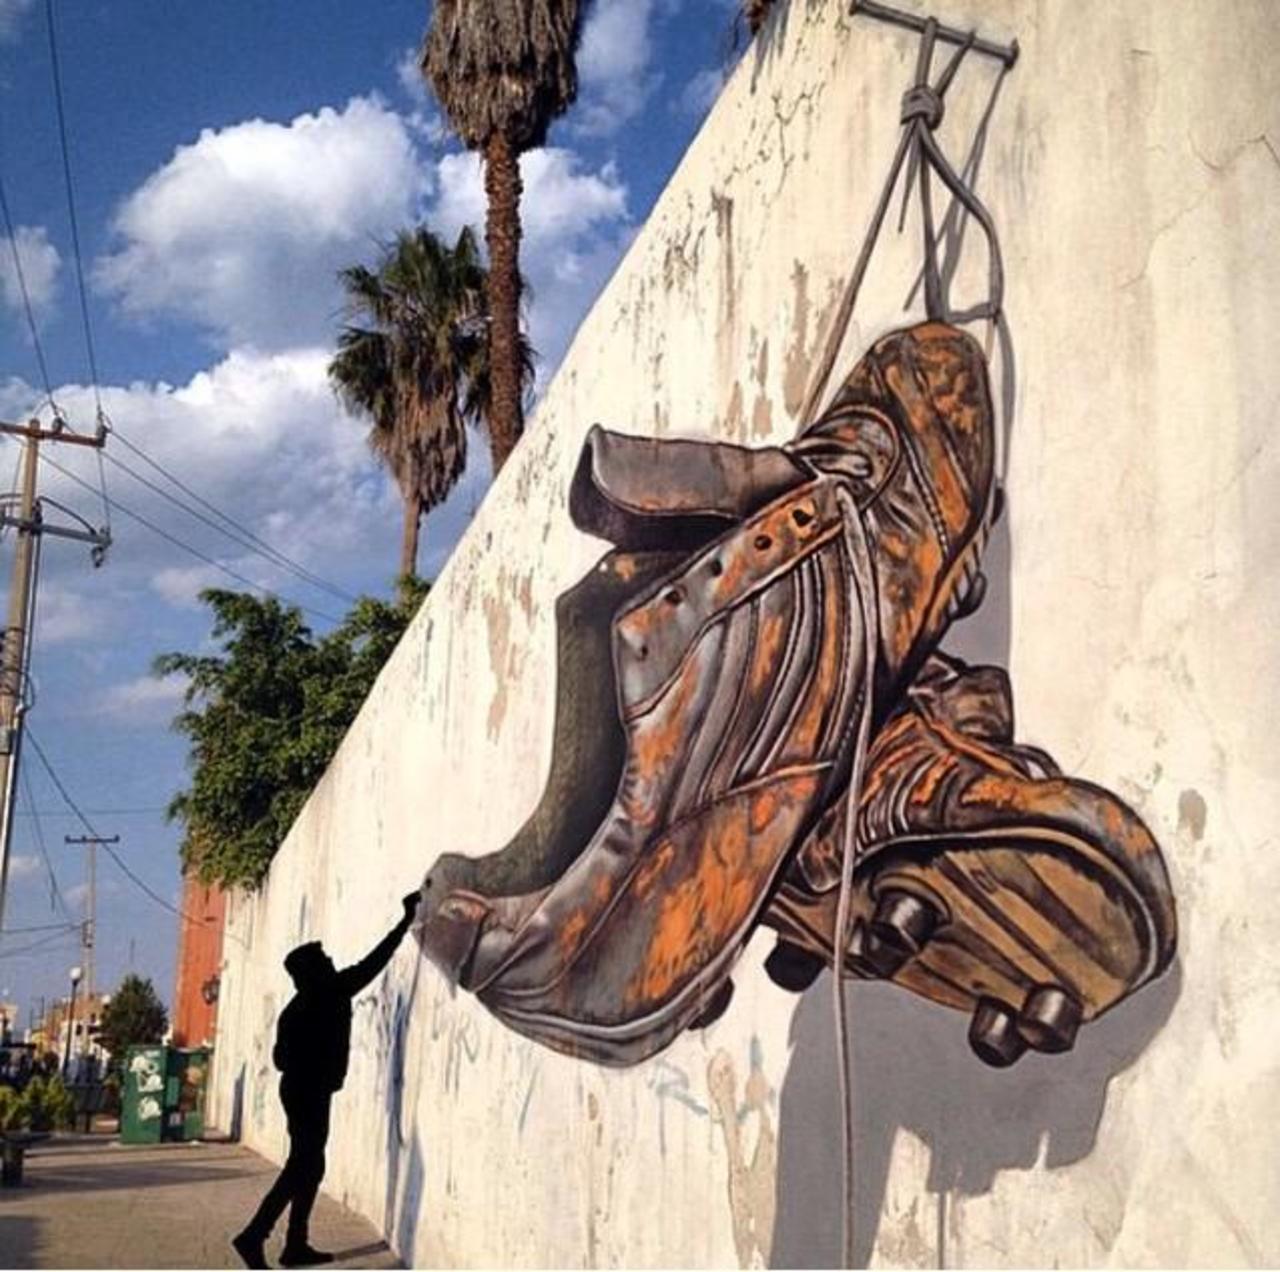 " @GoogleStreetArt Awesome anamorphic 3D Street Art by
Juandres Vera #art #graffiti #mural
#streetart http://t.co/sjyrwStO7n